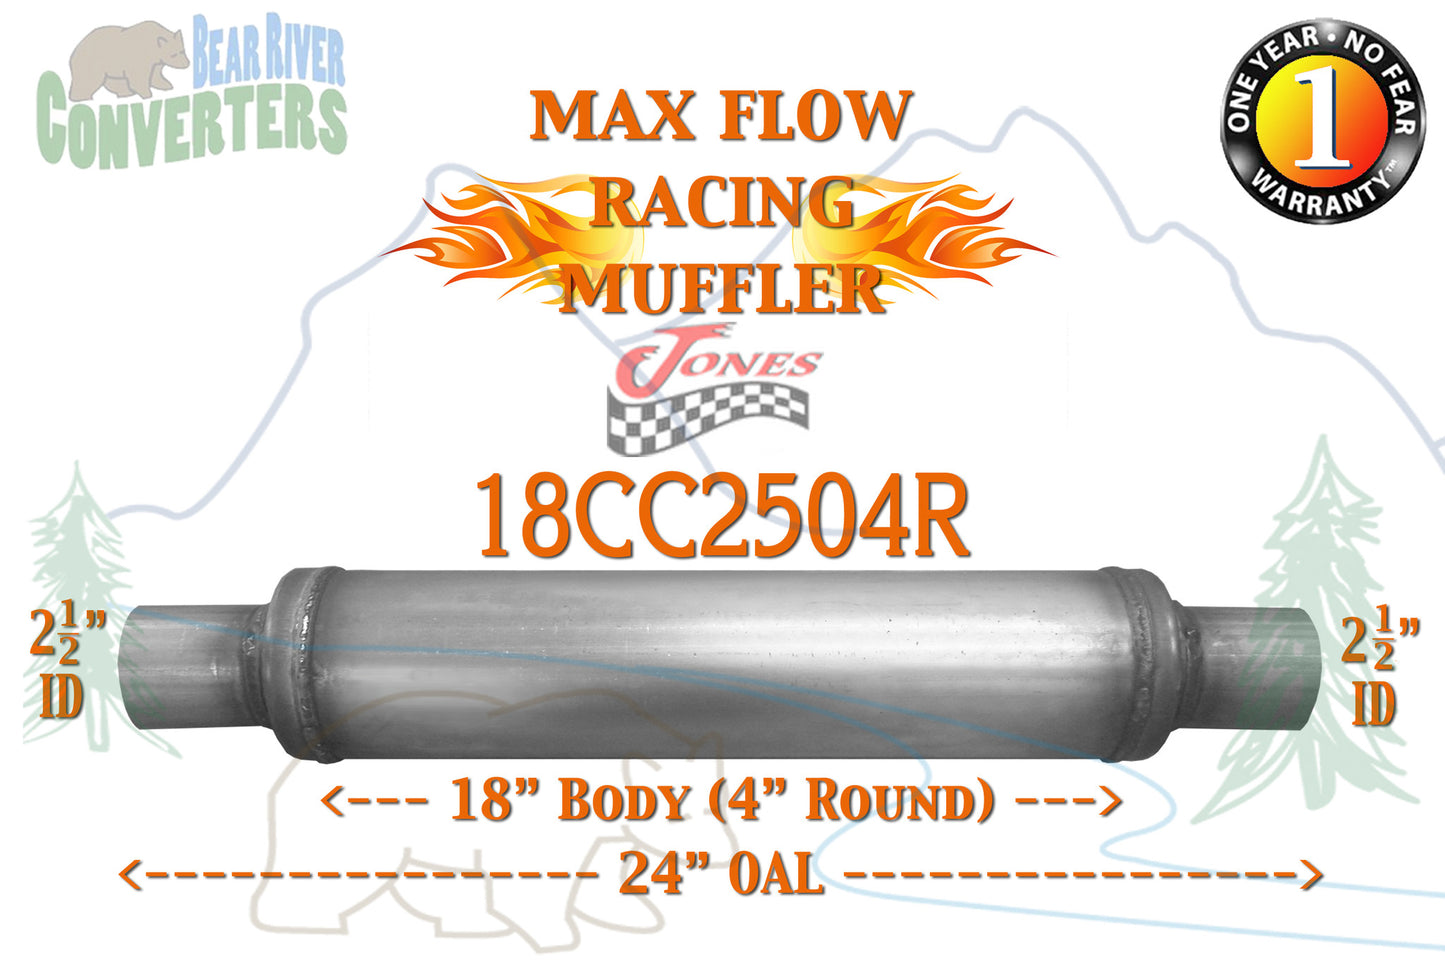 18CC2504R Jones JXS0426 Max Flow Racing Muffler 18” Round Body 2 1/2” 2.5” Pipe Center/Center 24” OAL - Bear River Converters